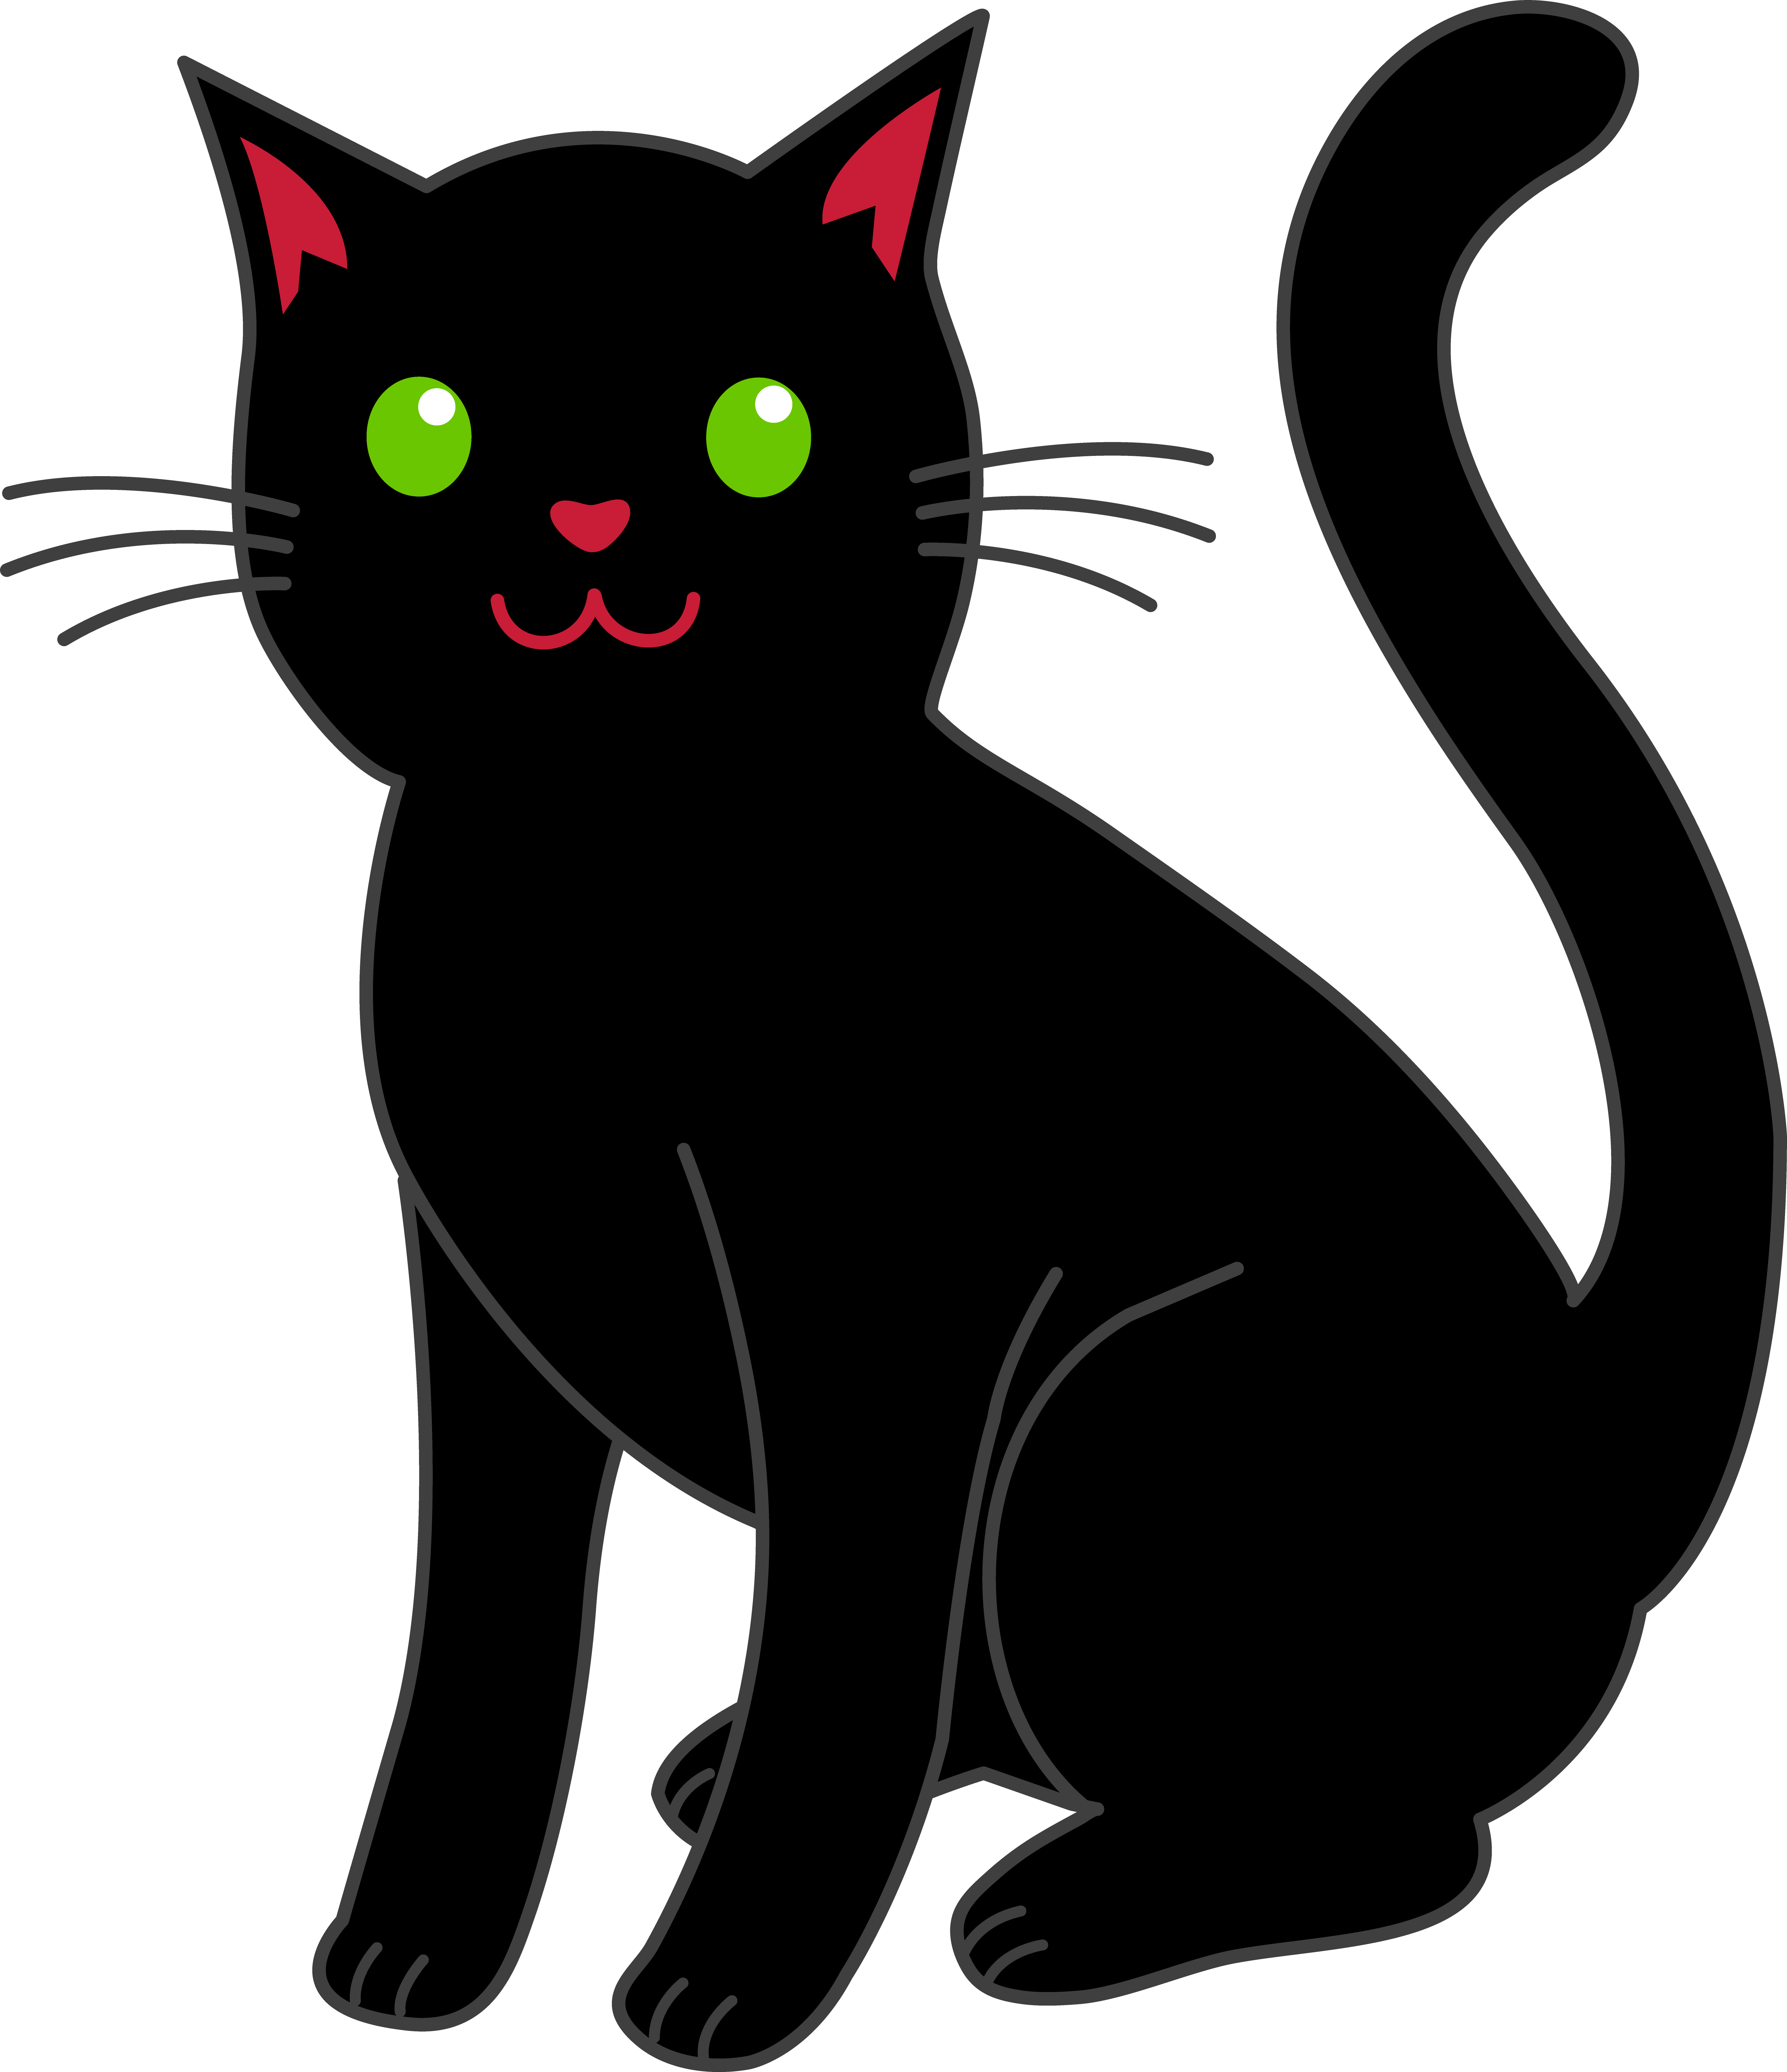 Black cat clip art free | Clipart Panda - Free Clipart Images